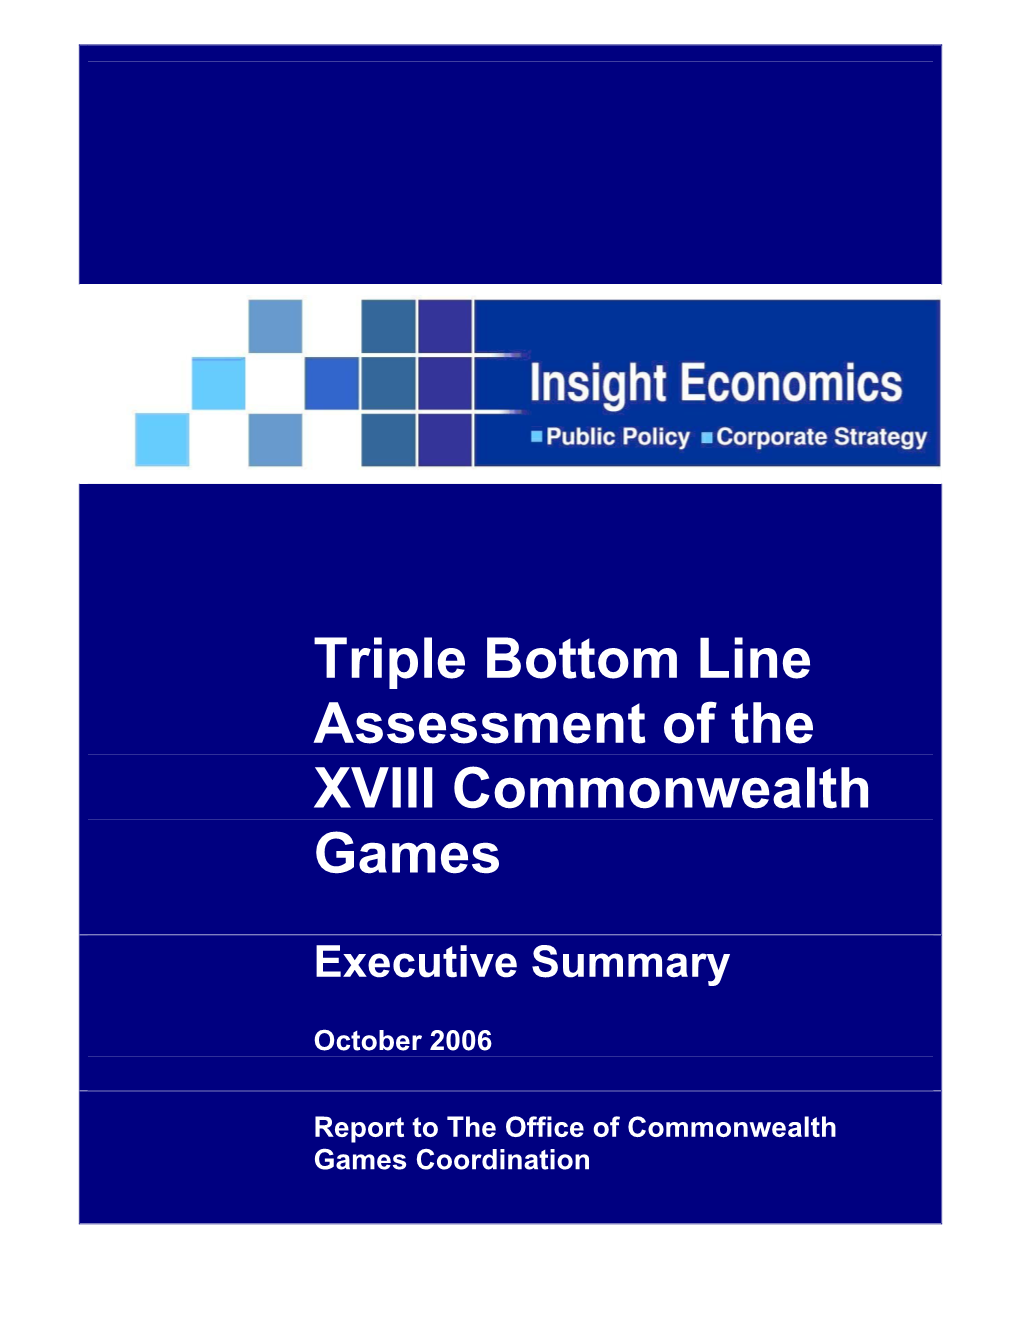 Triple Bottom Line Assessment of the XVIII Commonwealth Games